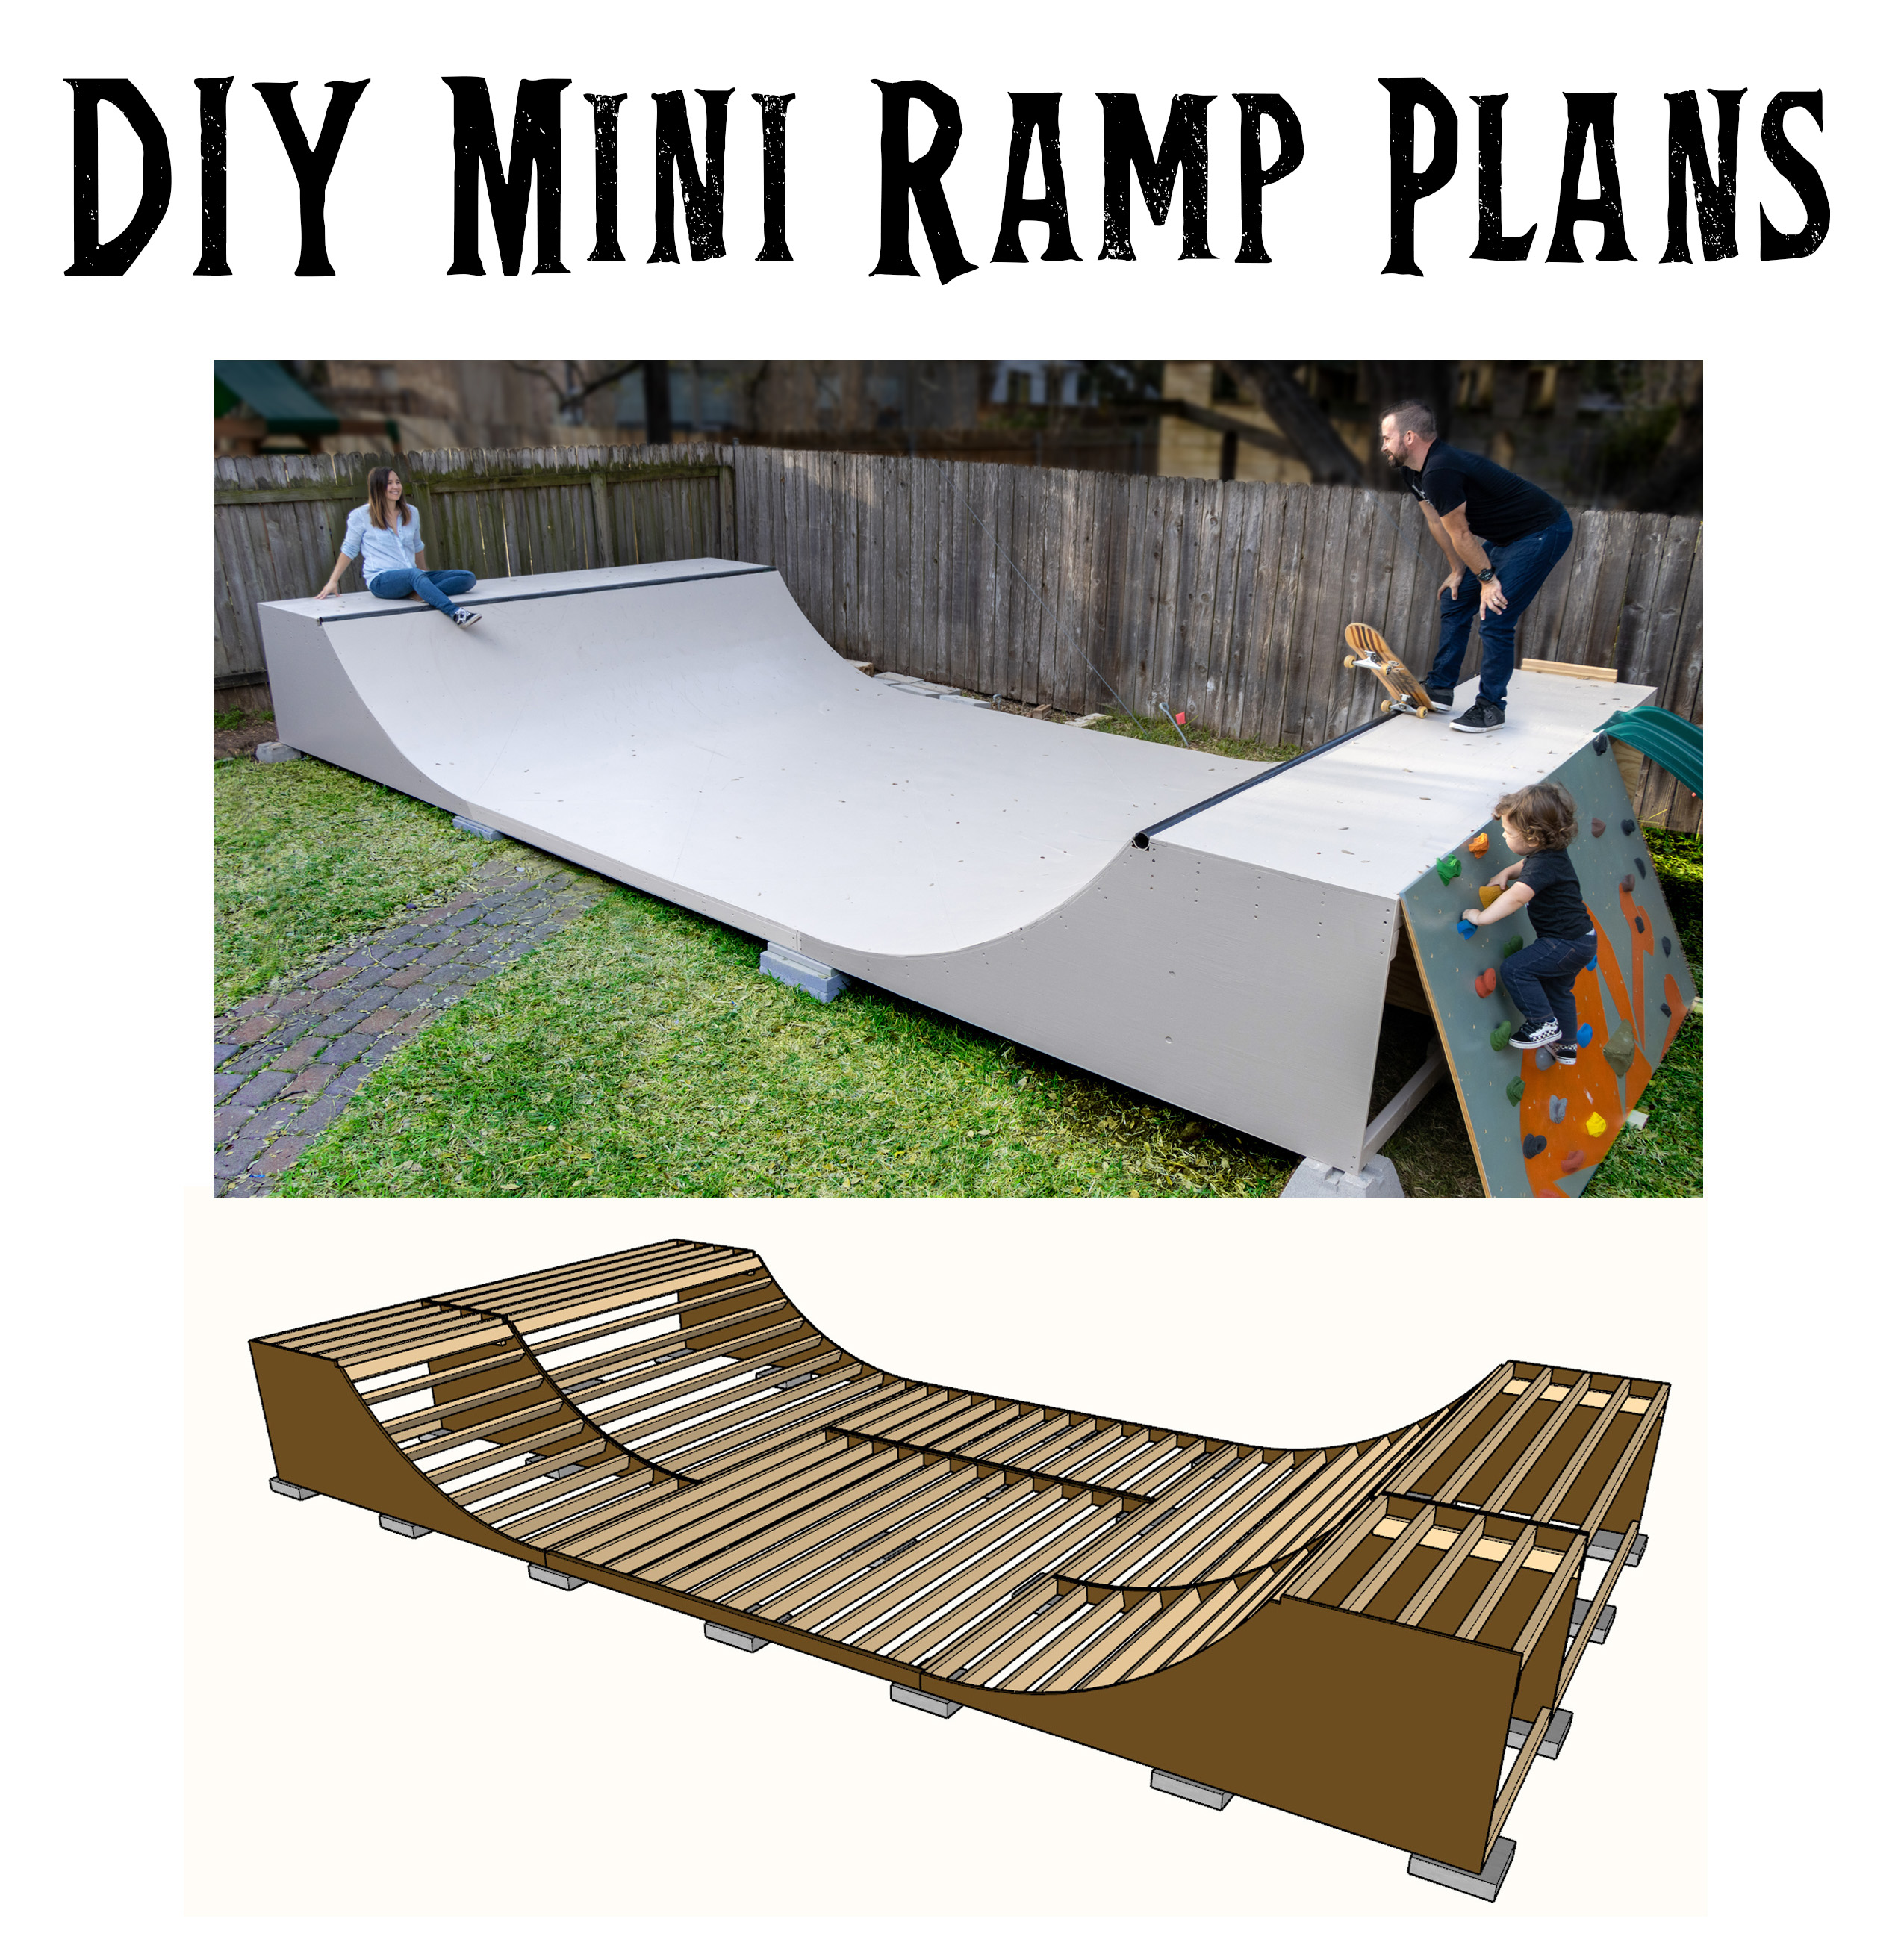 3 mini ramp plans